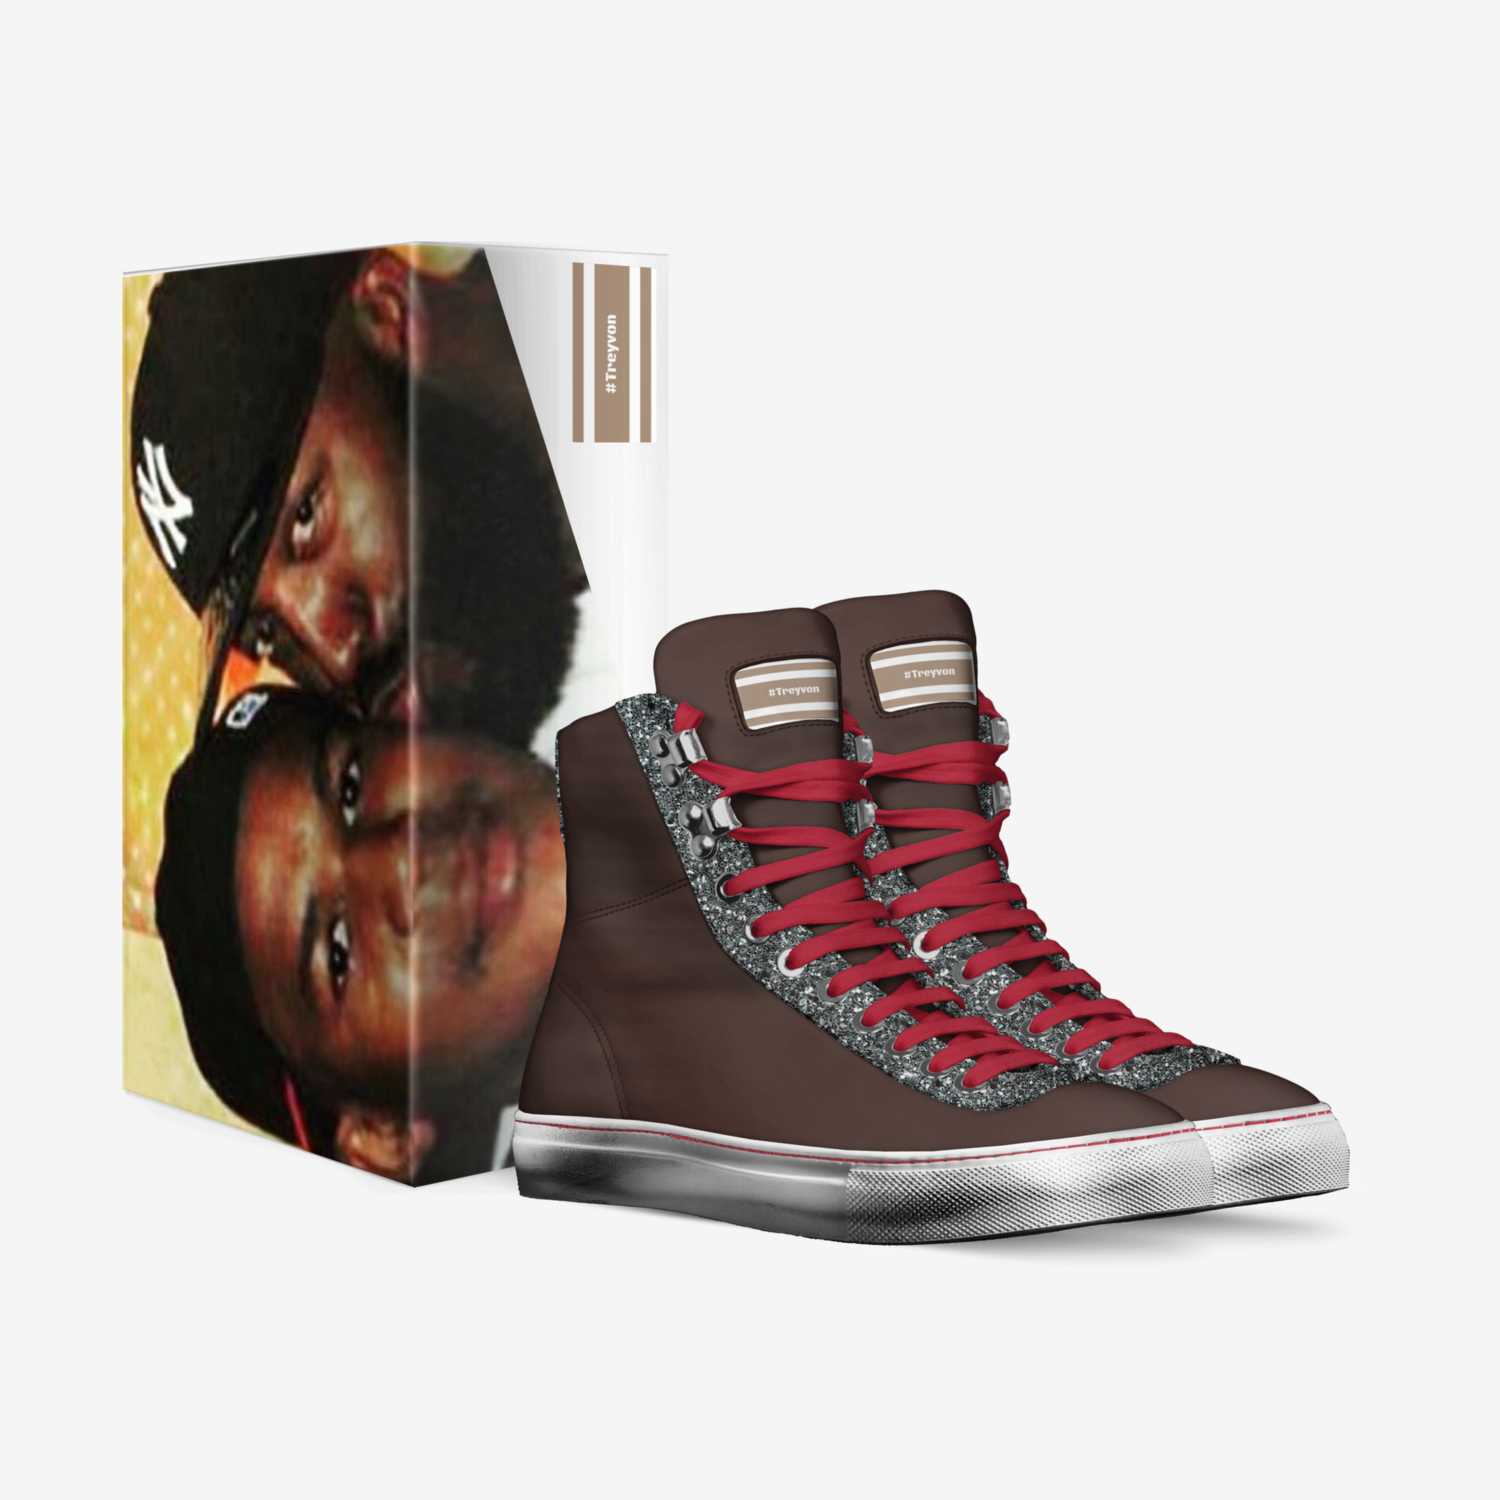 #Treyvon custom made in Italy shoes by Moffatt Gordon | Box view